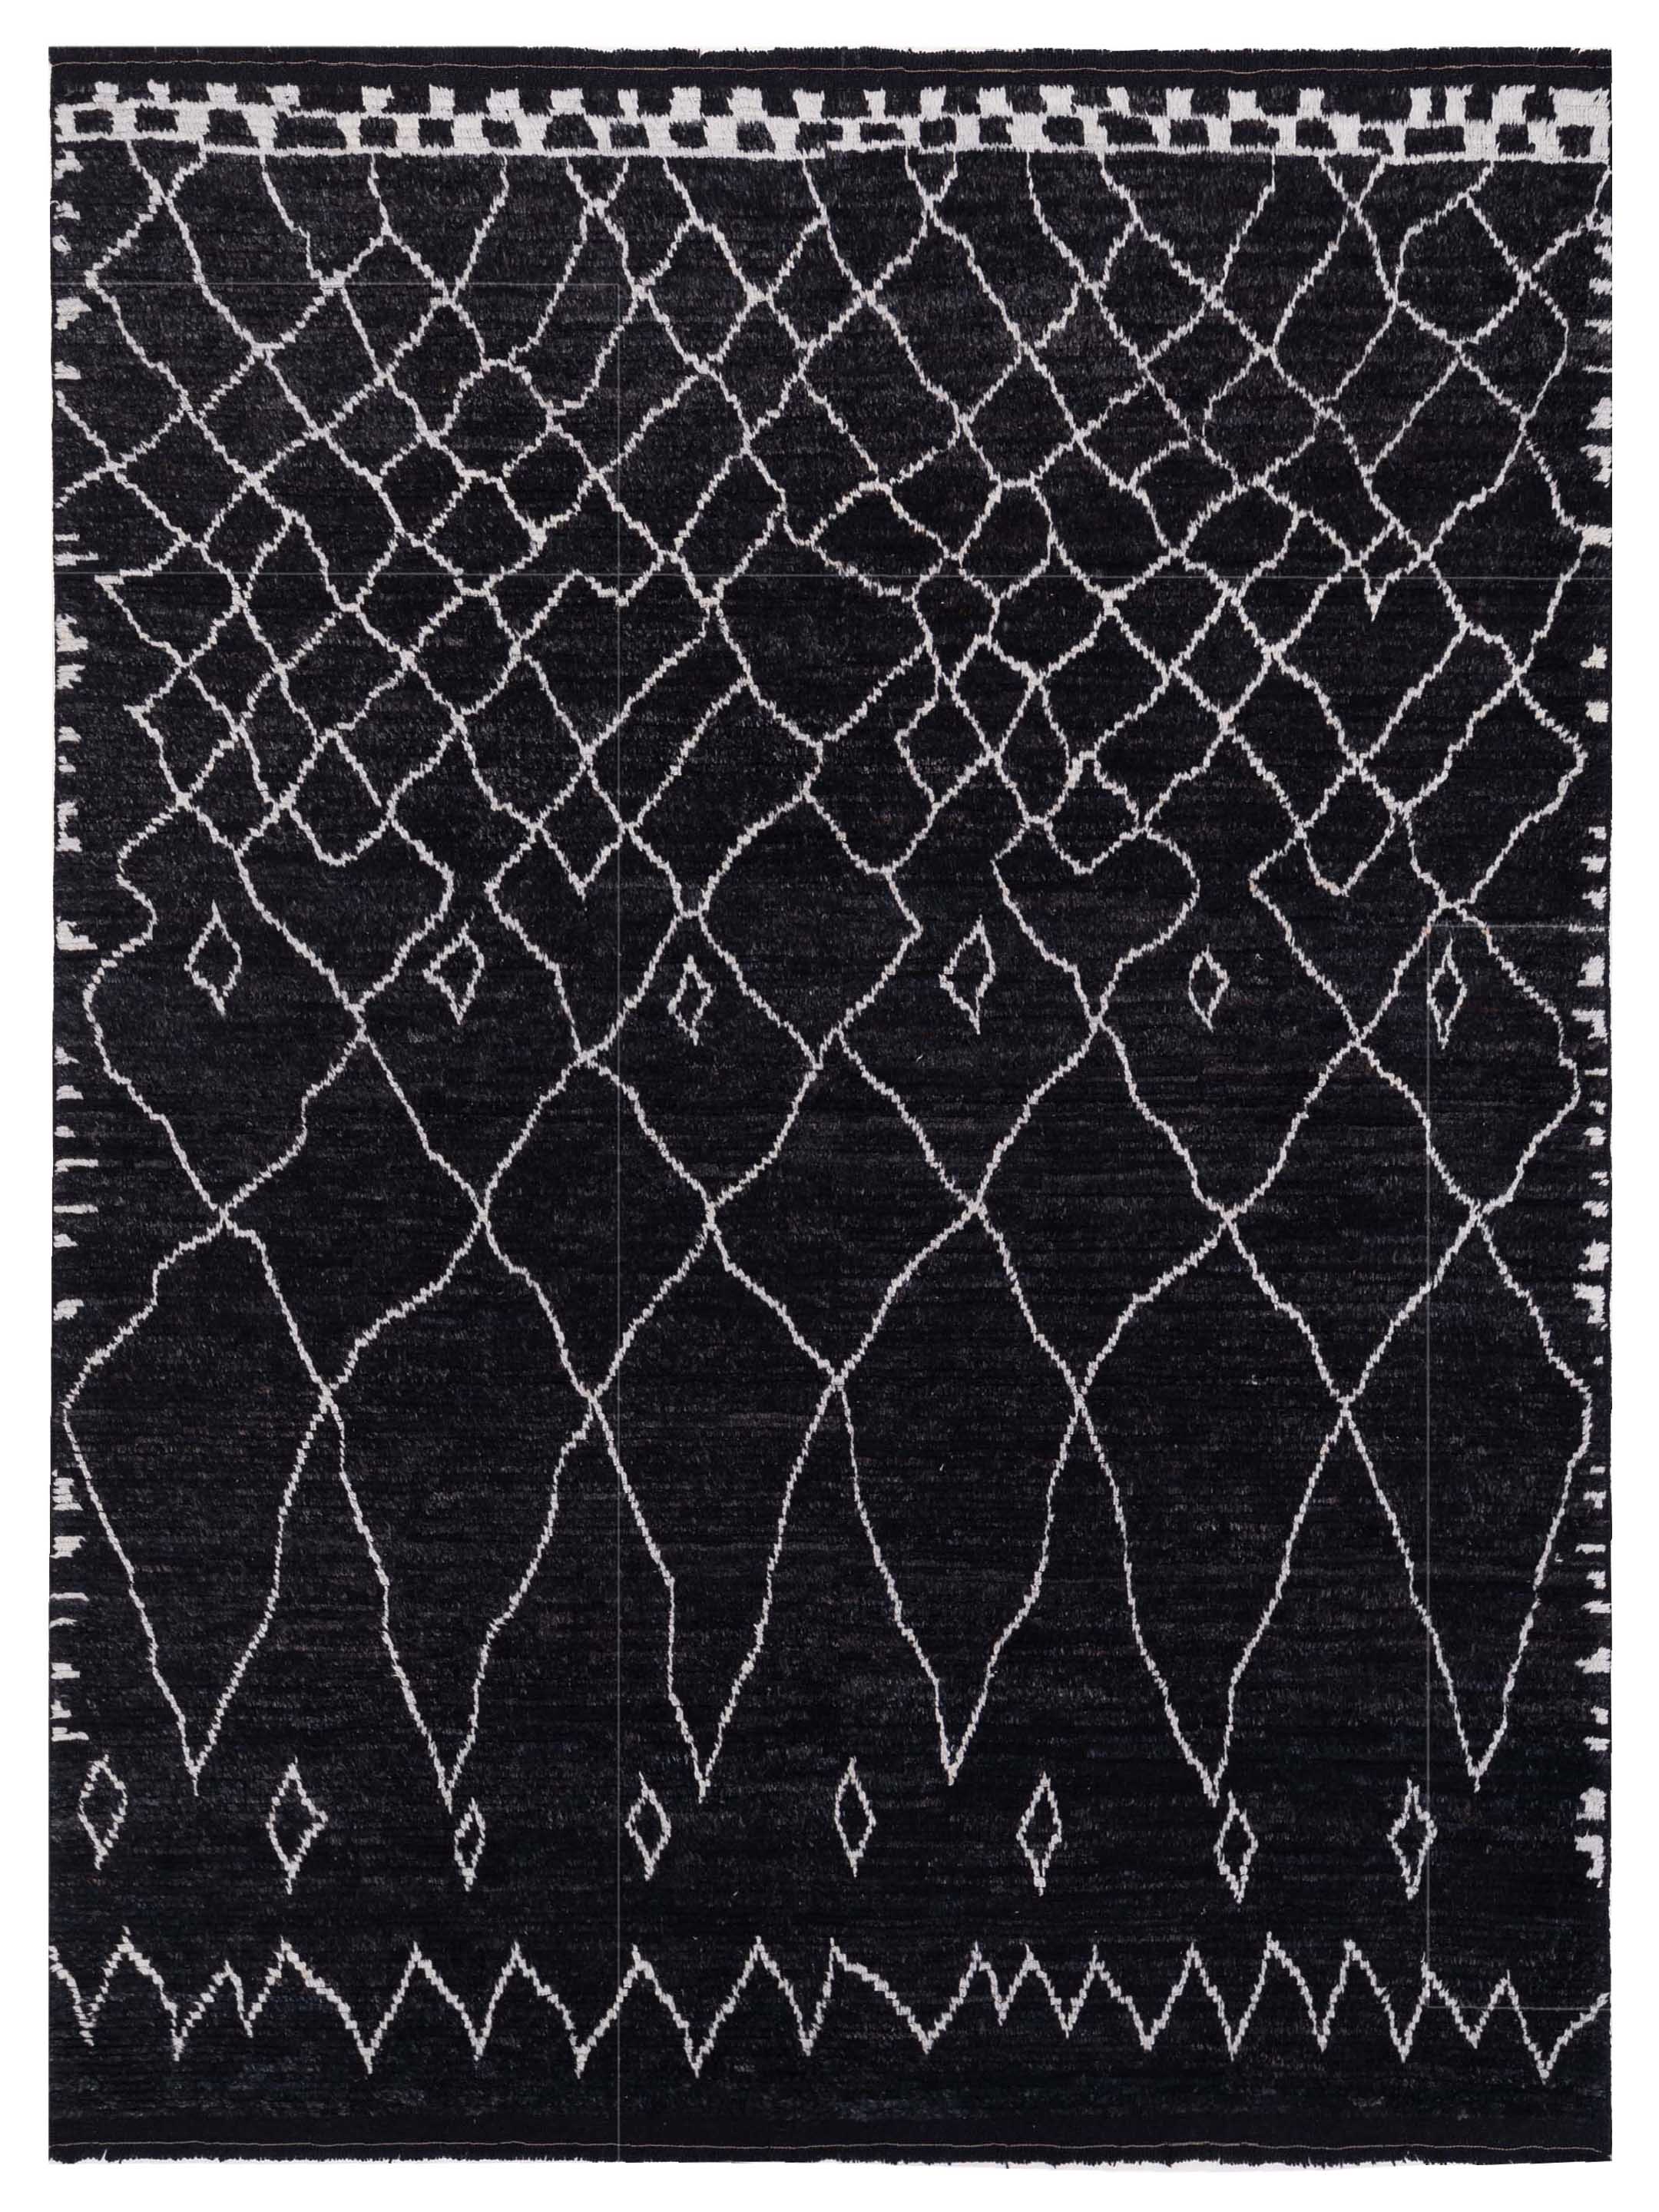 Berber Contemporary Black Ivory Checkered Inspired Rug	